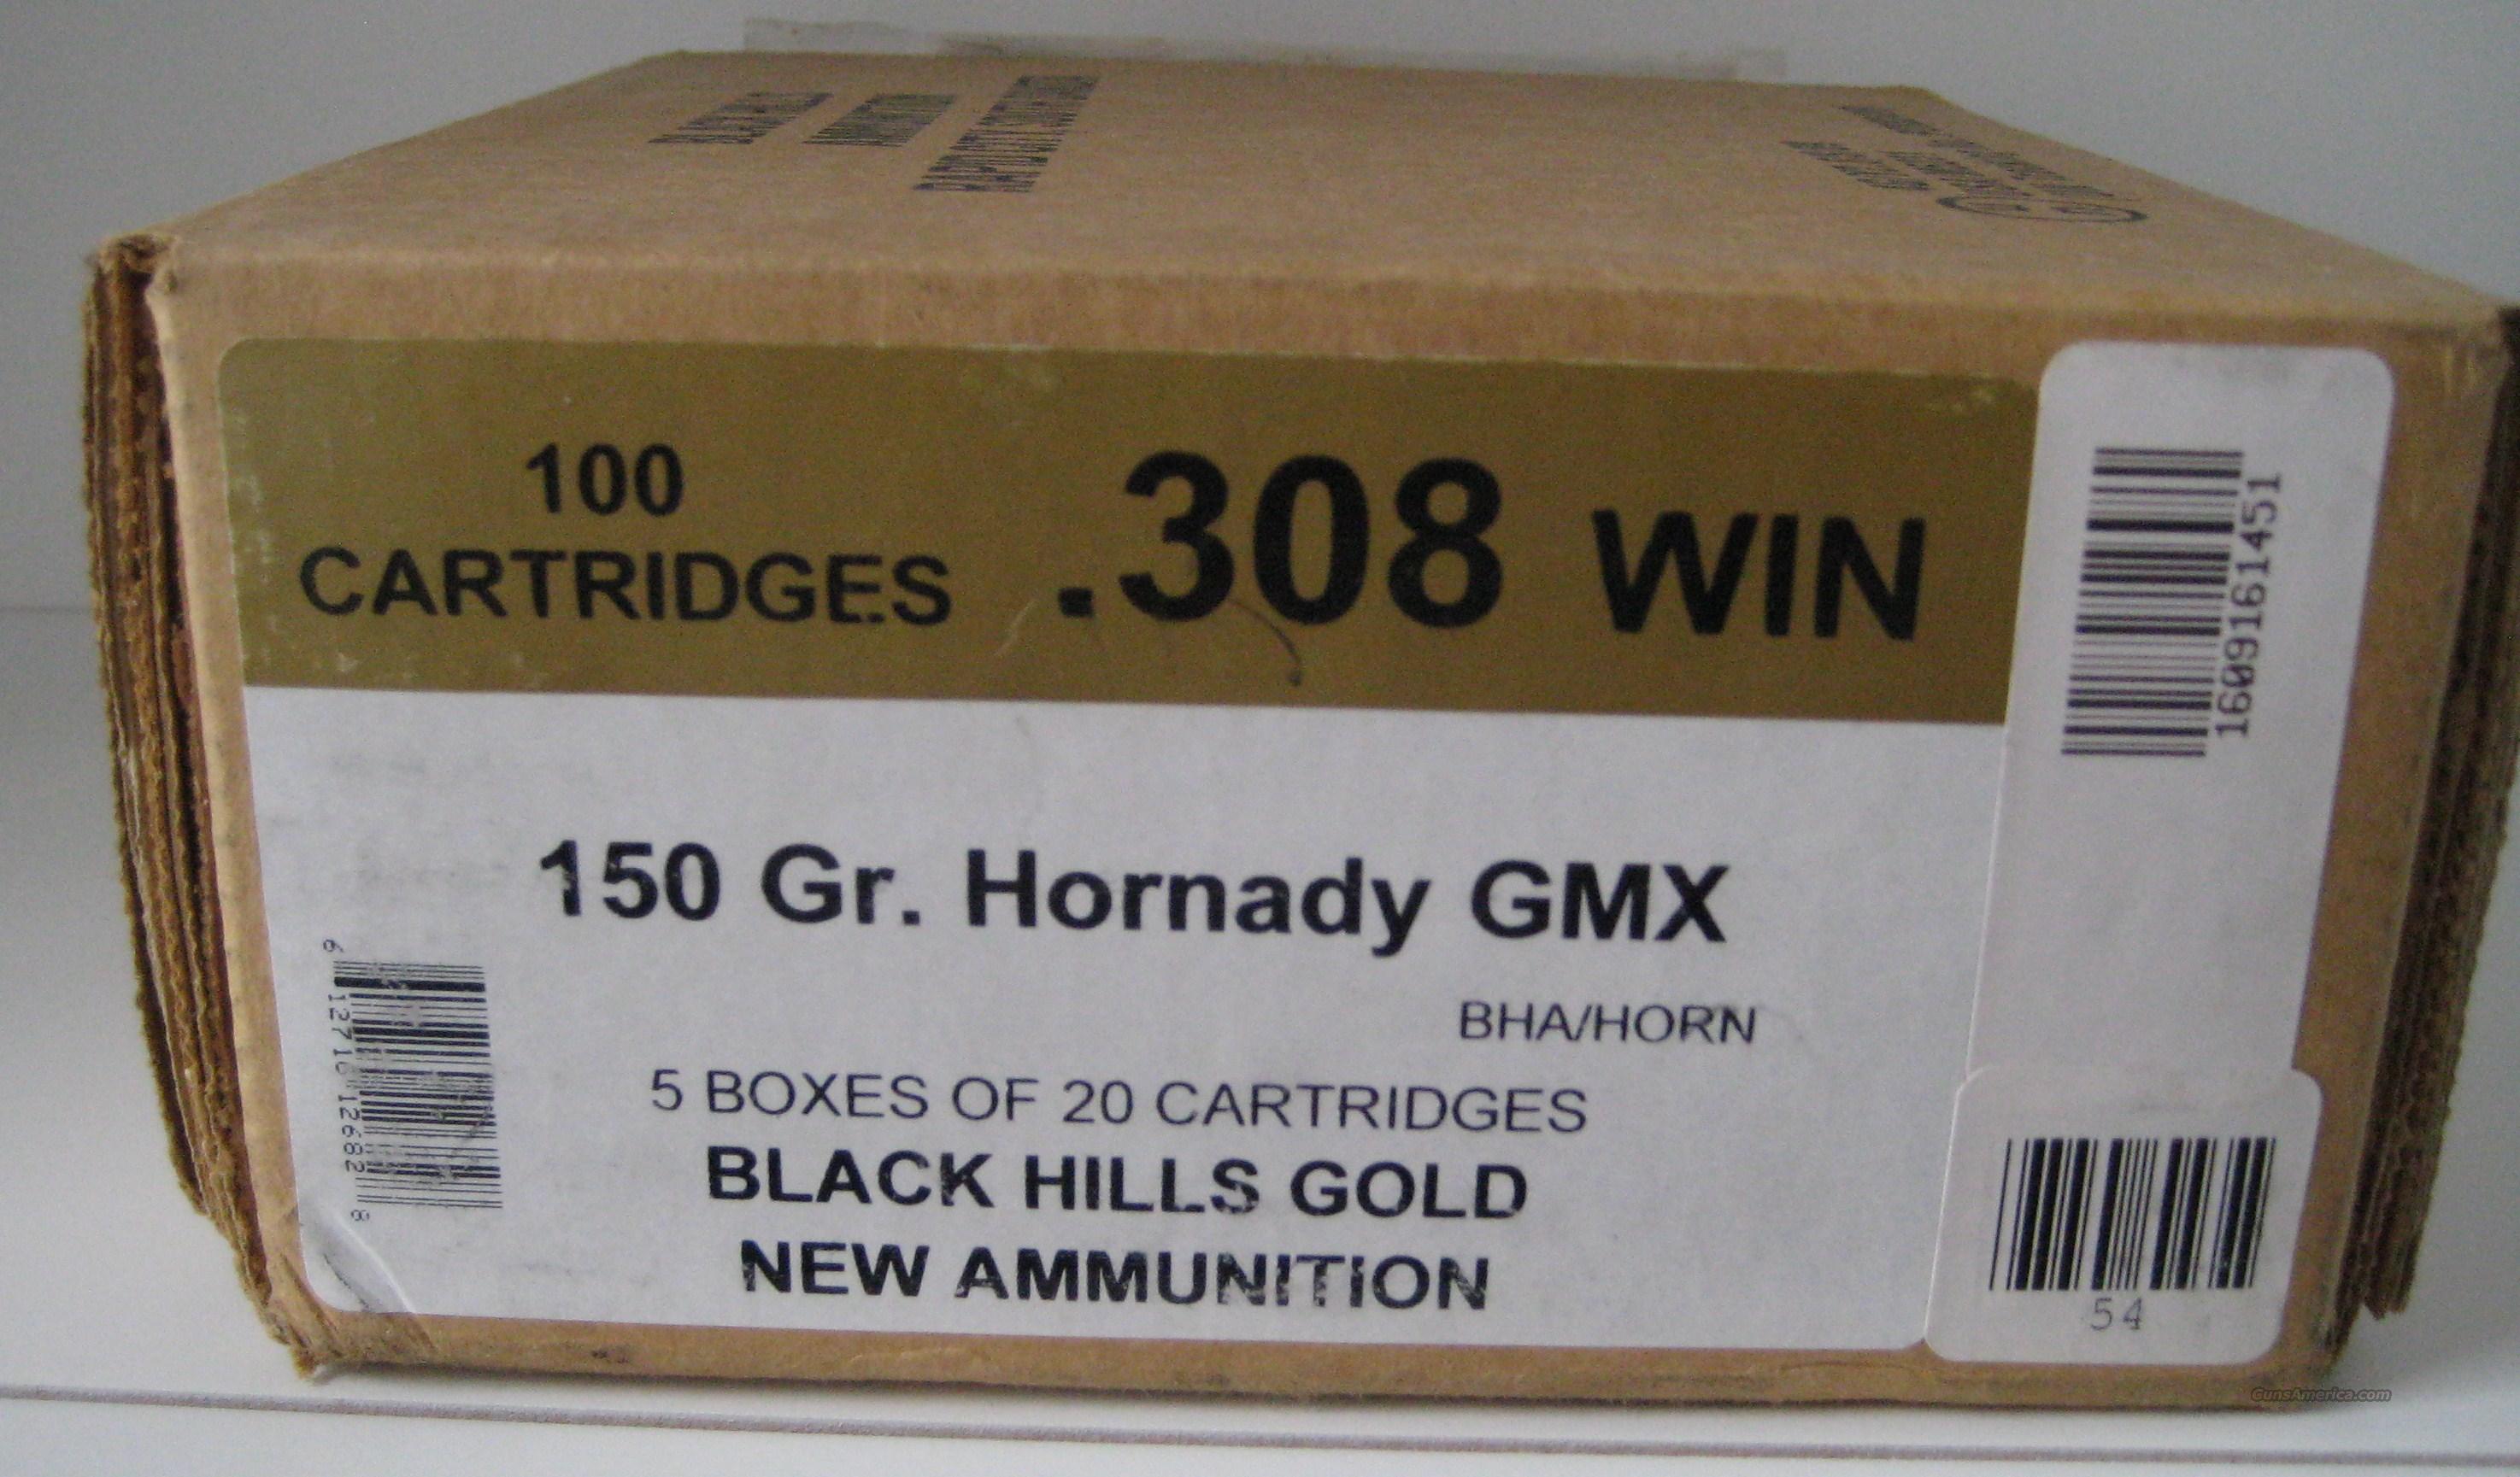 BLACK HILLS GOLD 308 150 GR Hornady... for sale at Gunsamerica.com ...